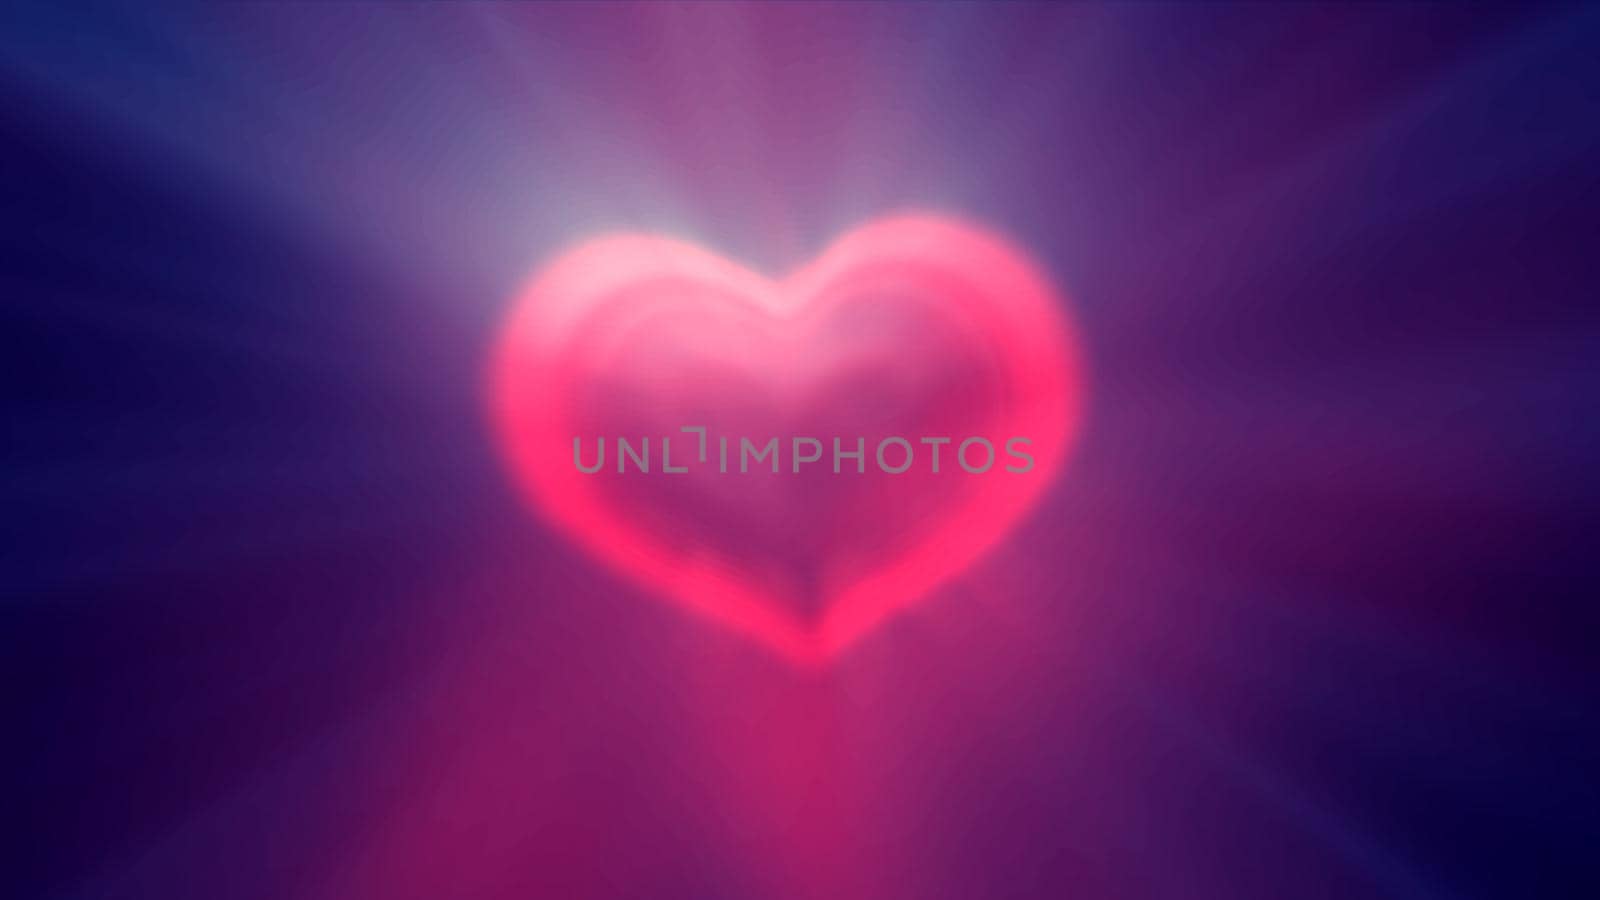 red heart neon glow ray light. illustration render